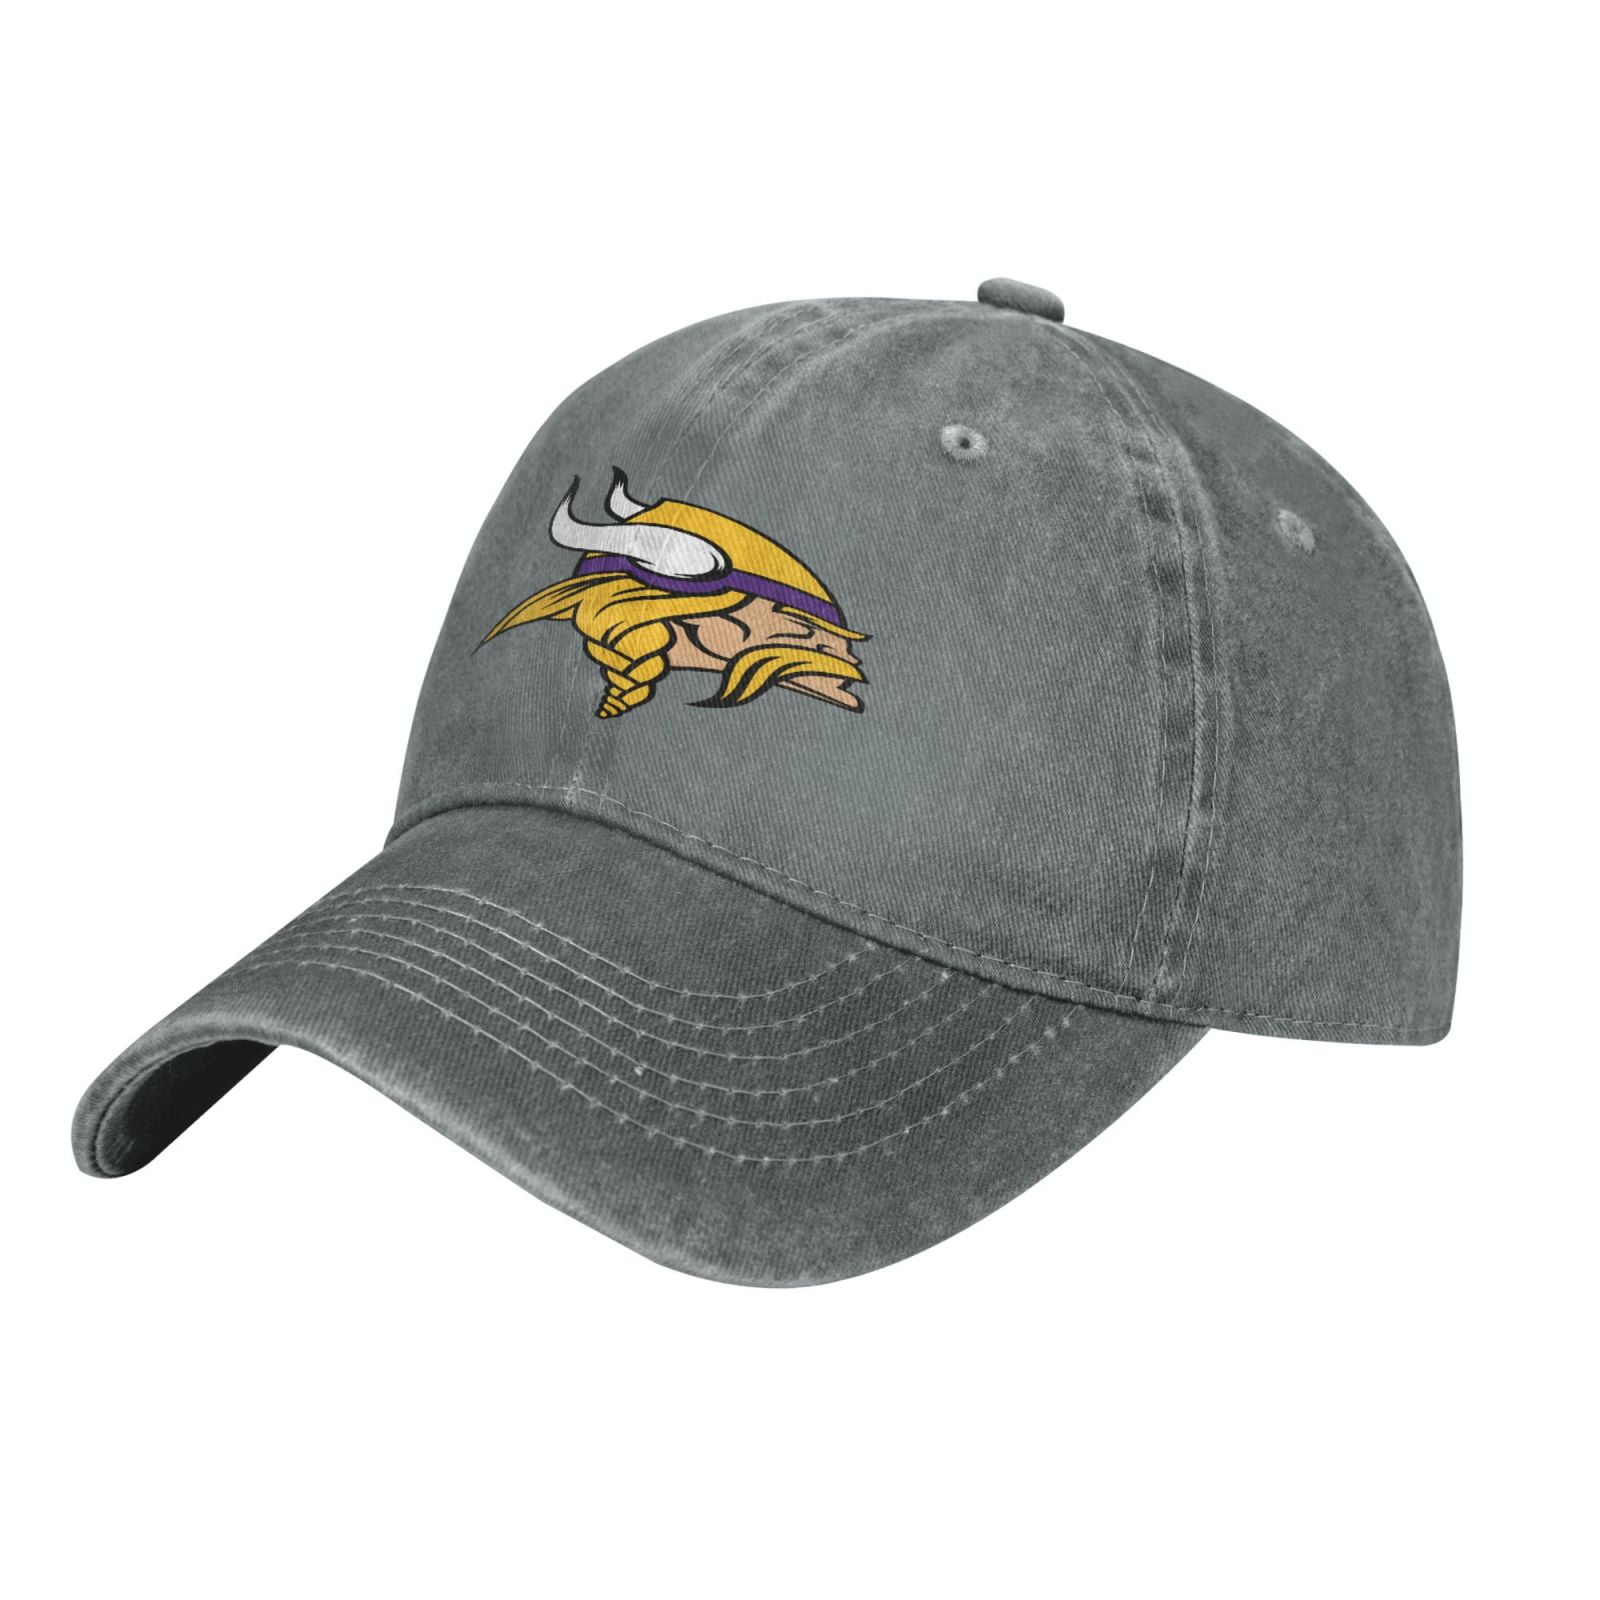 Minnesota-Vikings Baseball Cap Adjustable Hat Sun Shade Peaked Cap ...